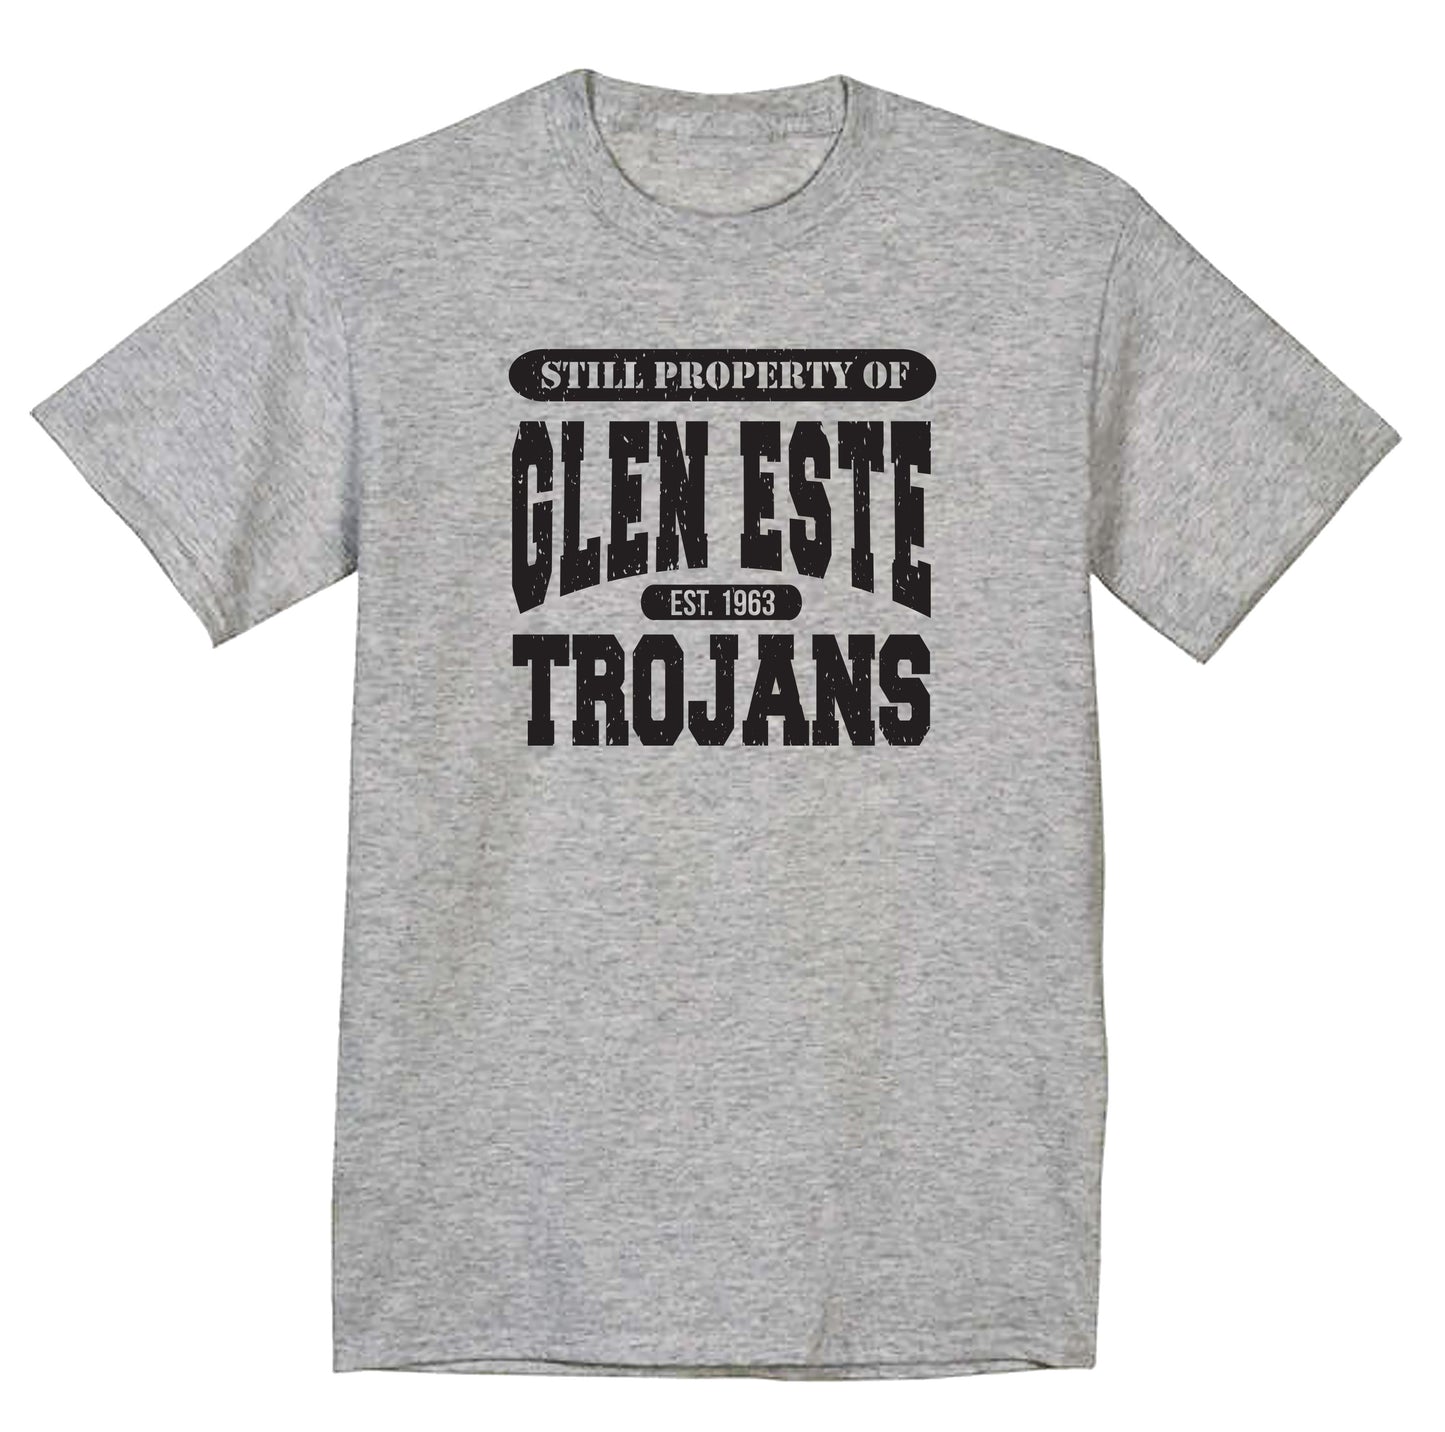 Glen Este Trojans on GRAY